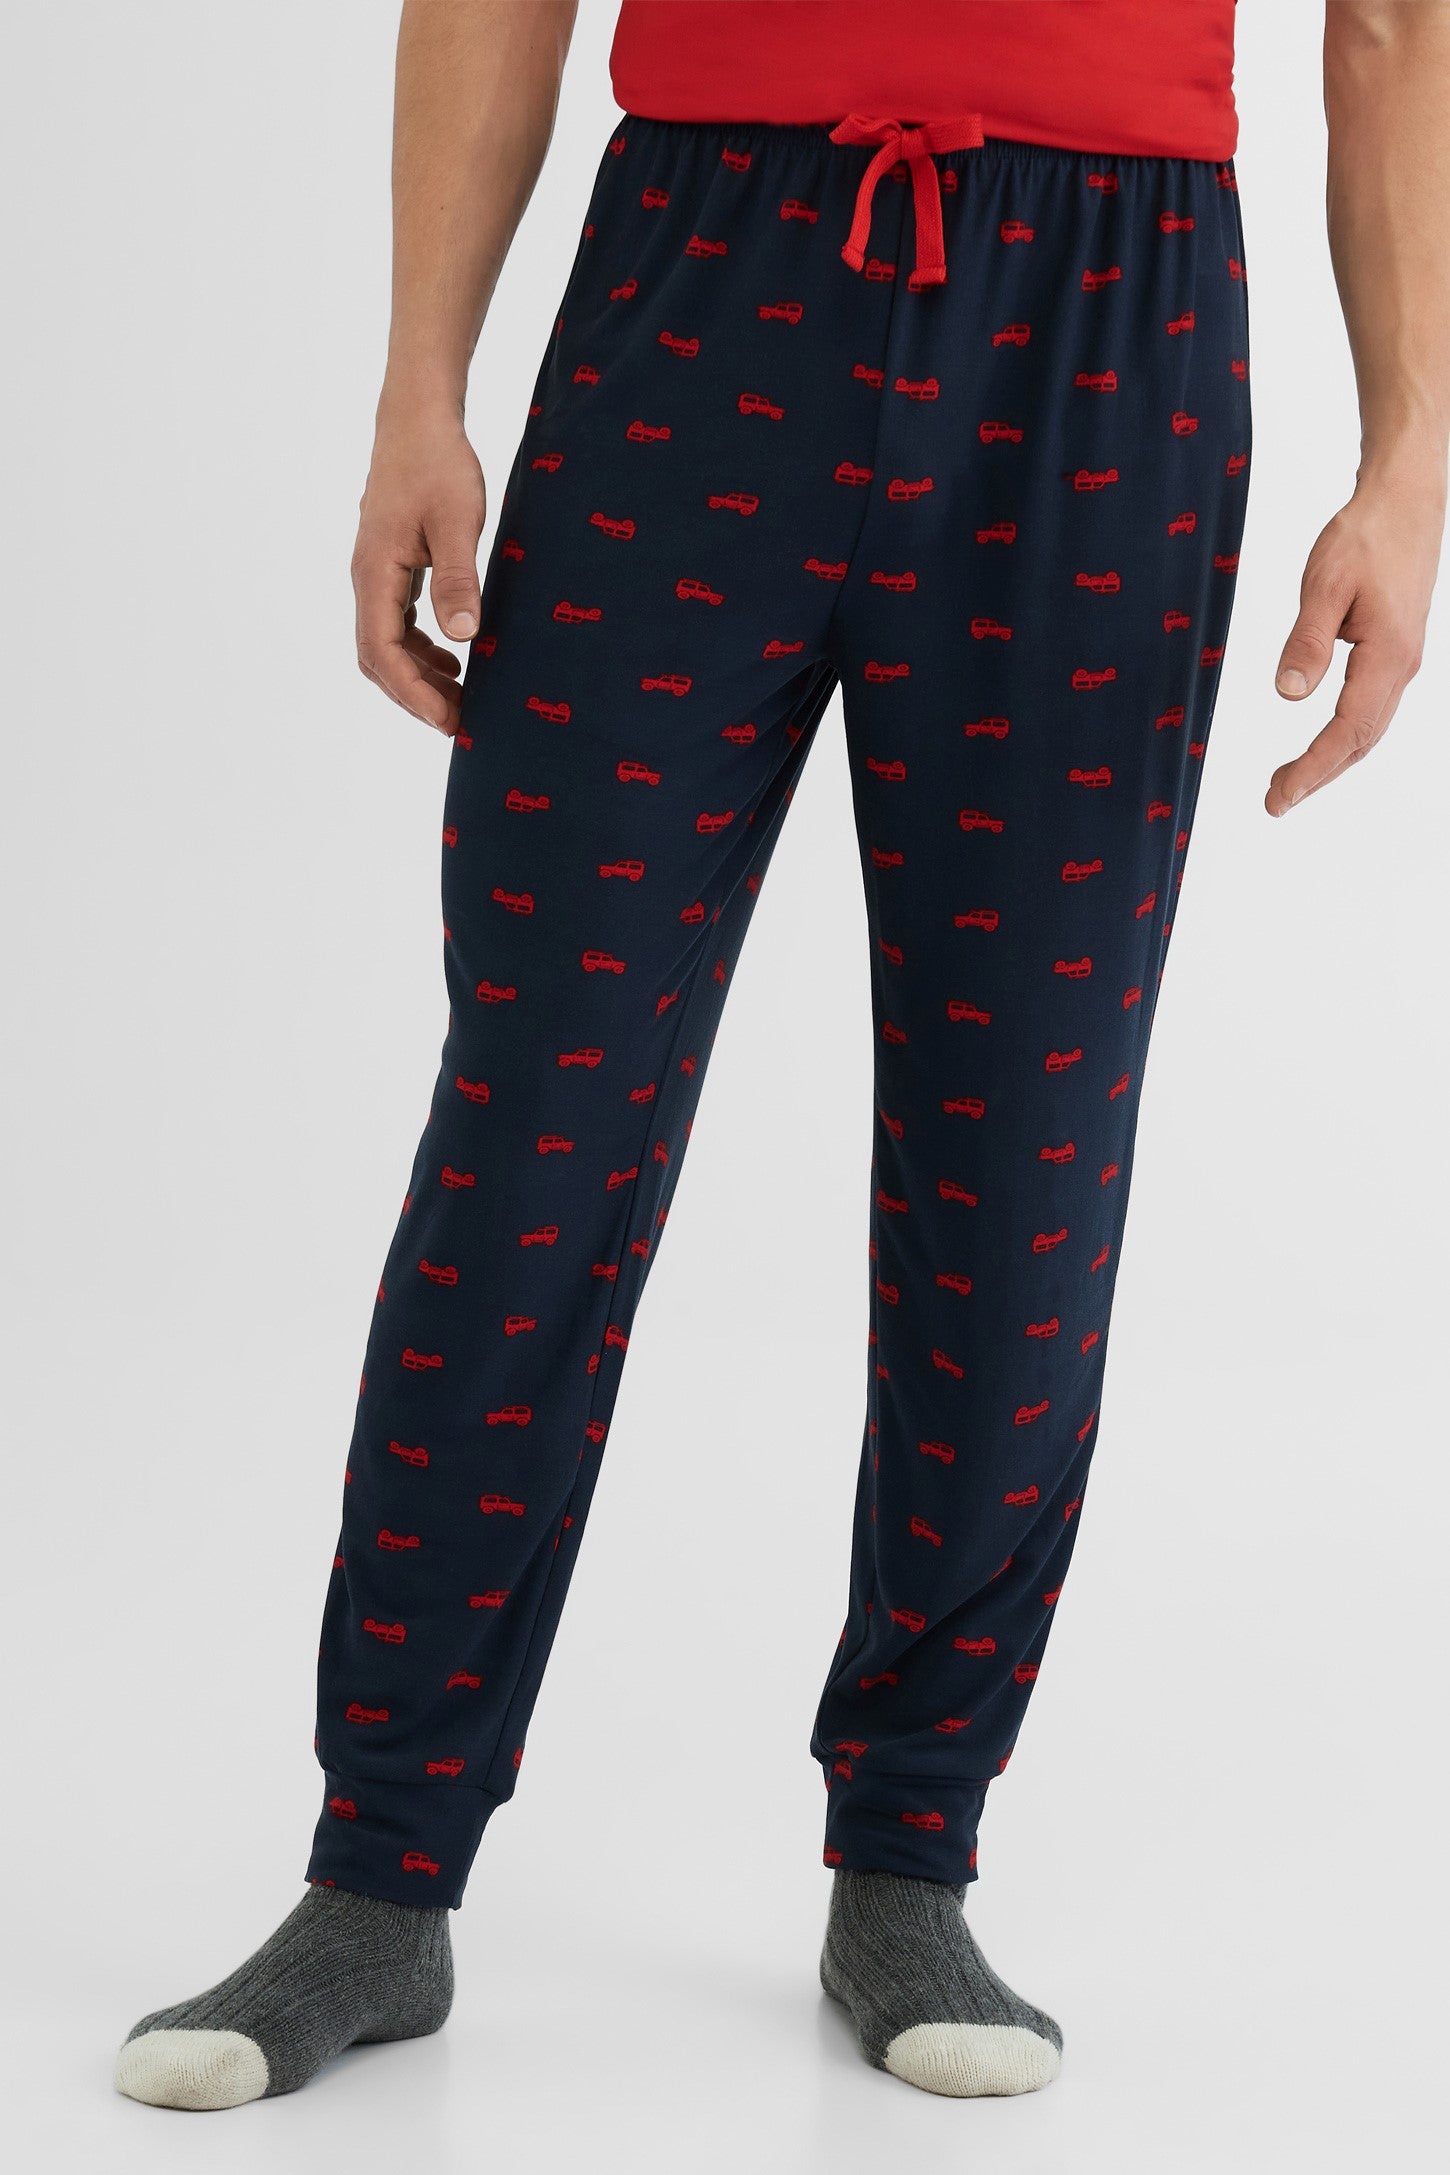 Pantalon pyjama jogger, 2/50$ - Homme && MARIN/MULTI